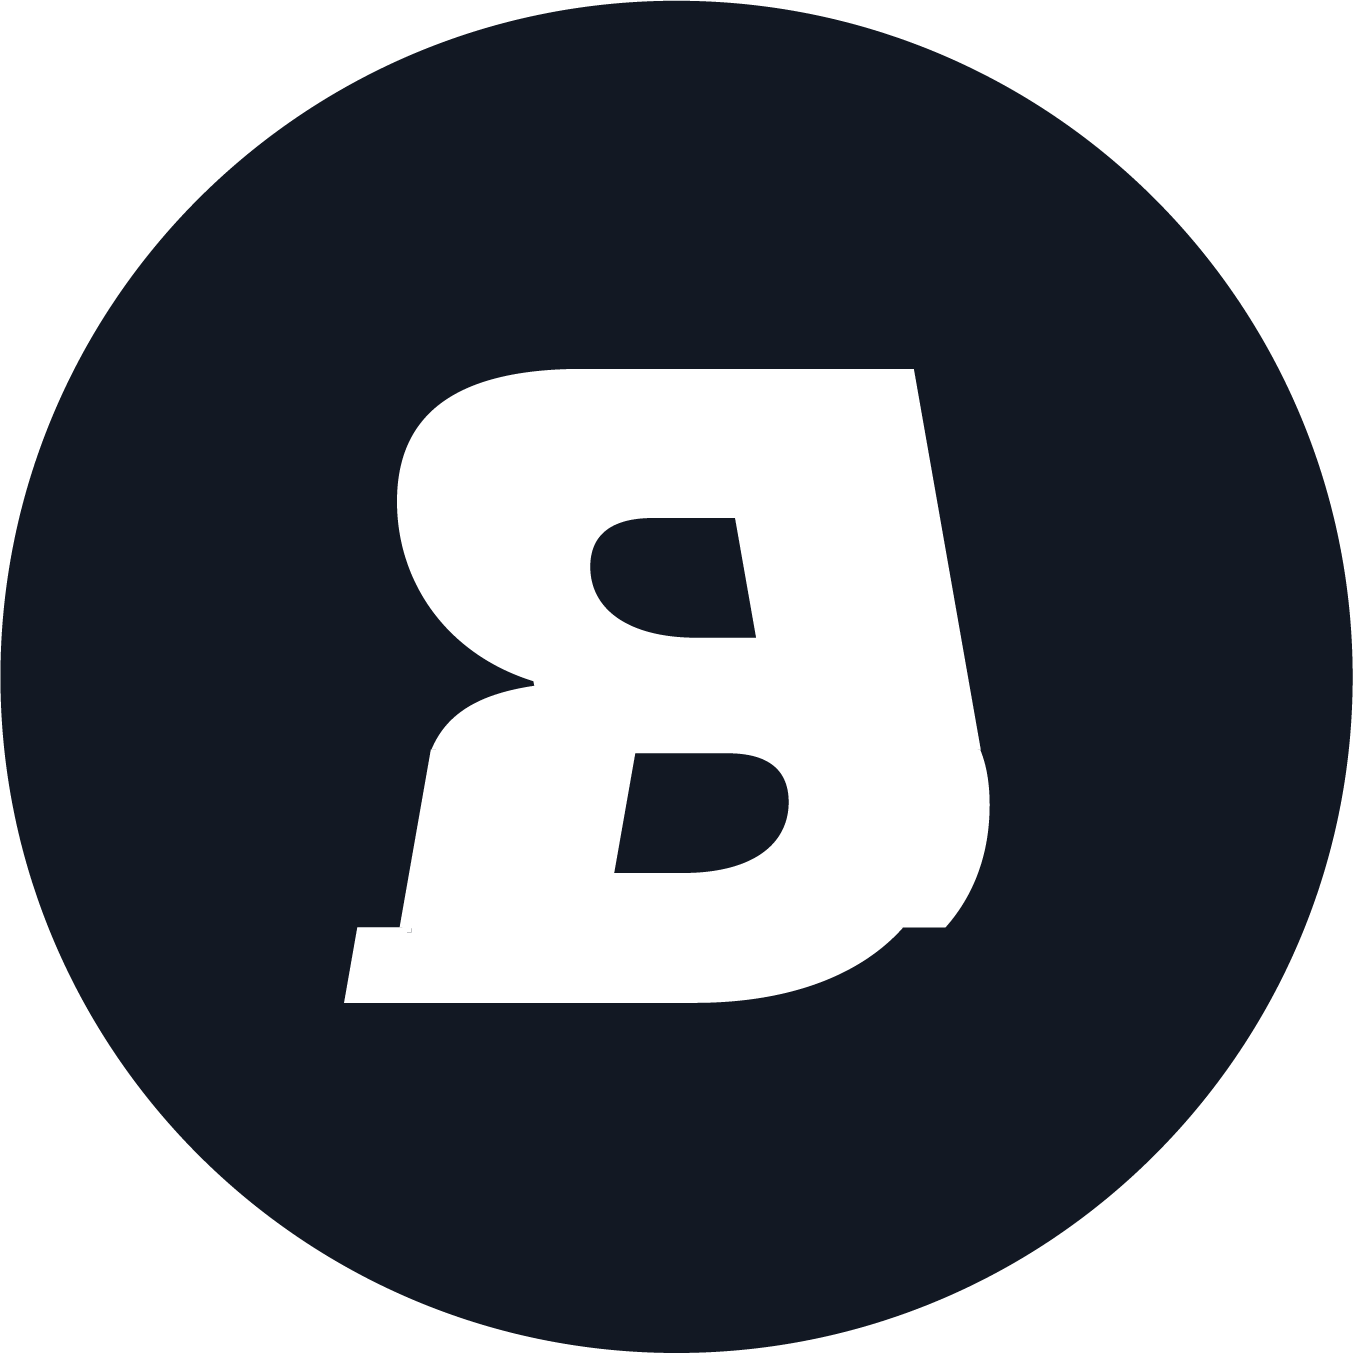 Boozt logo